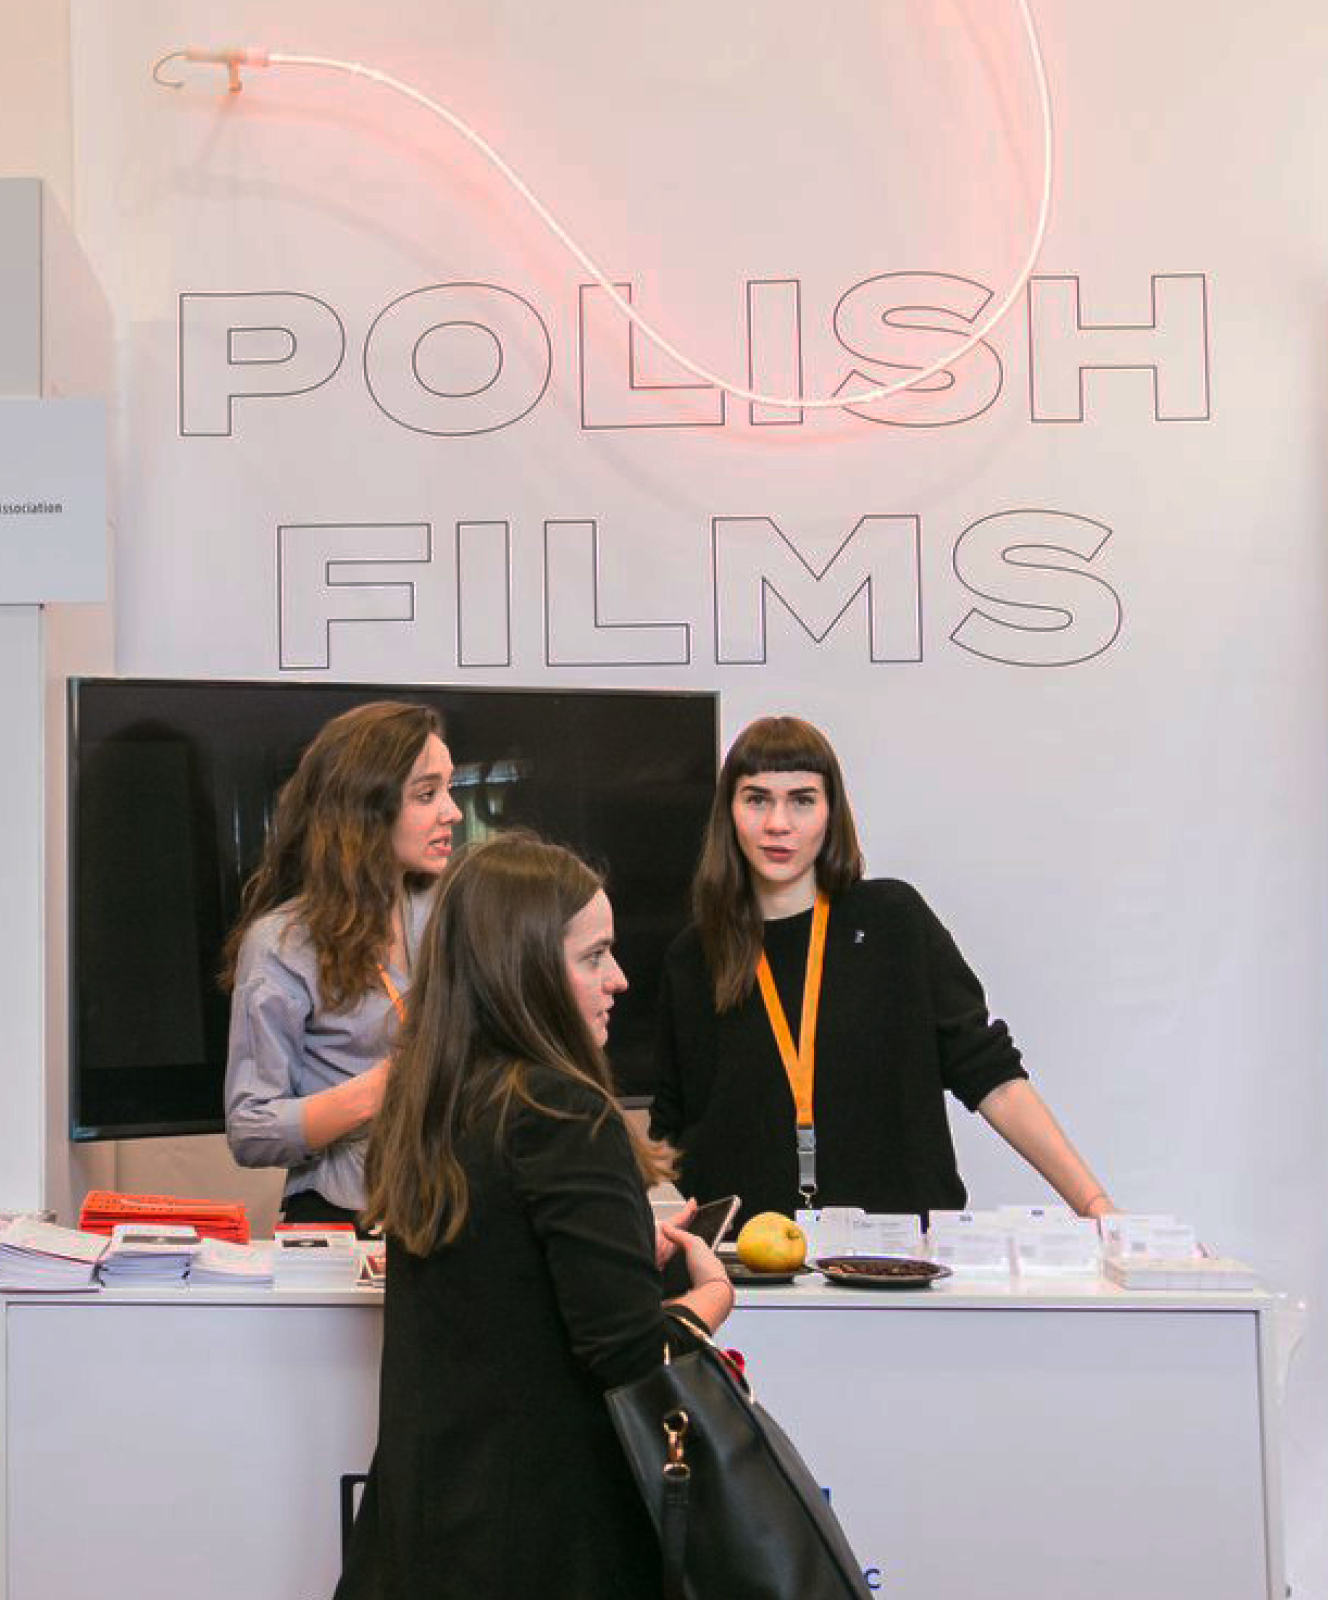 Berlinale – Polska obecność na festiwalu (6.2)